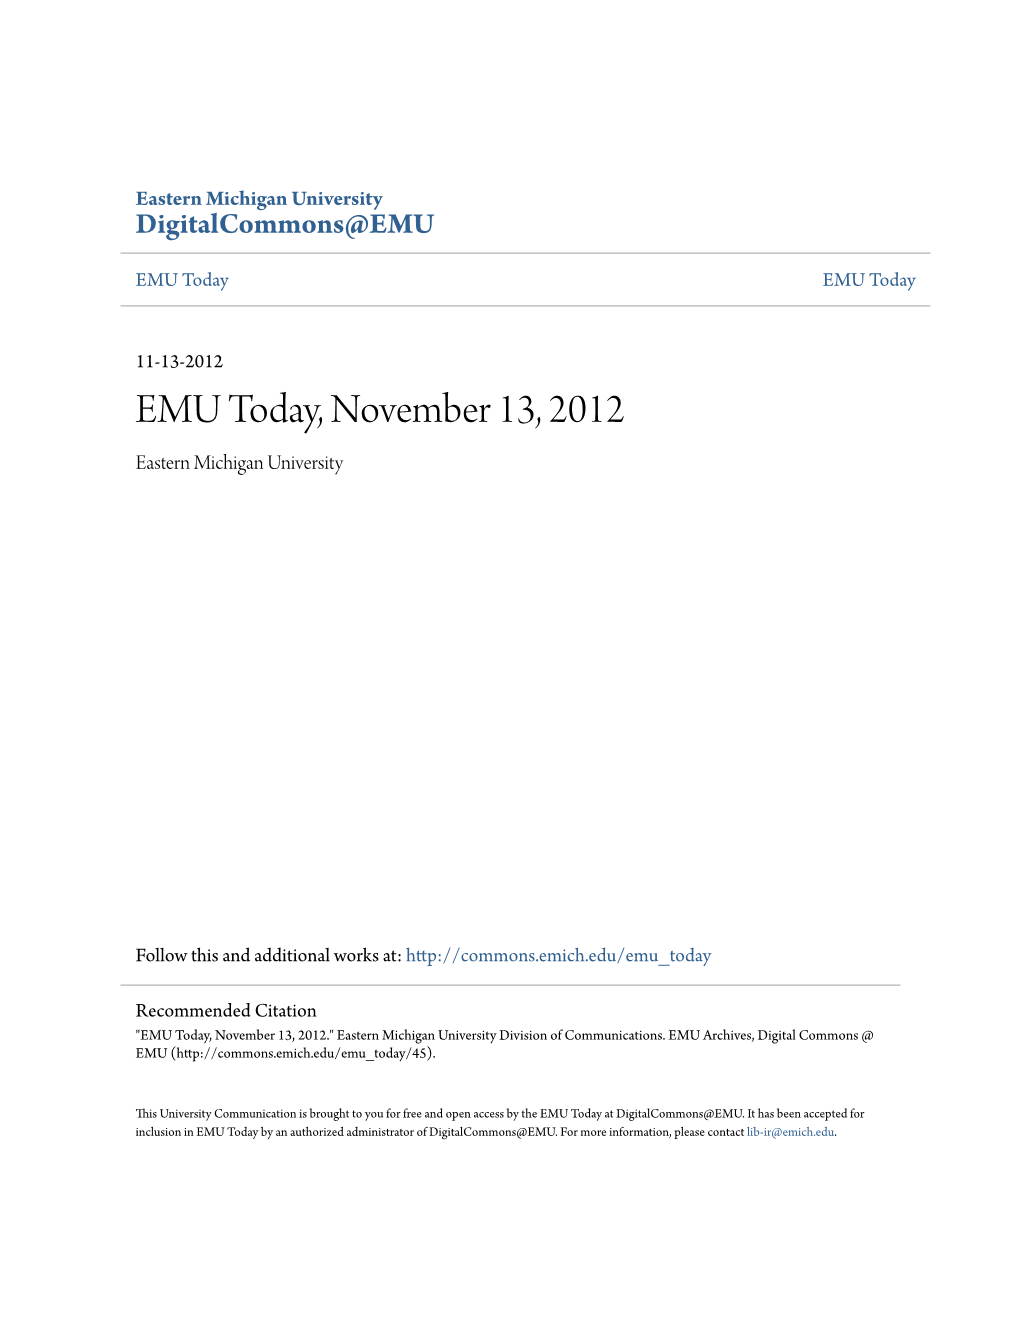 EMU Today, November 13, 2012 Eastern Michigan University